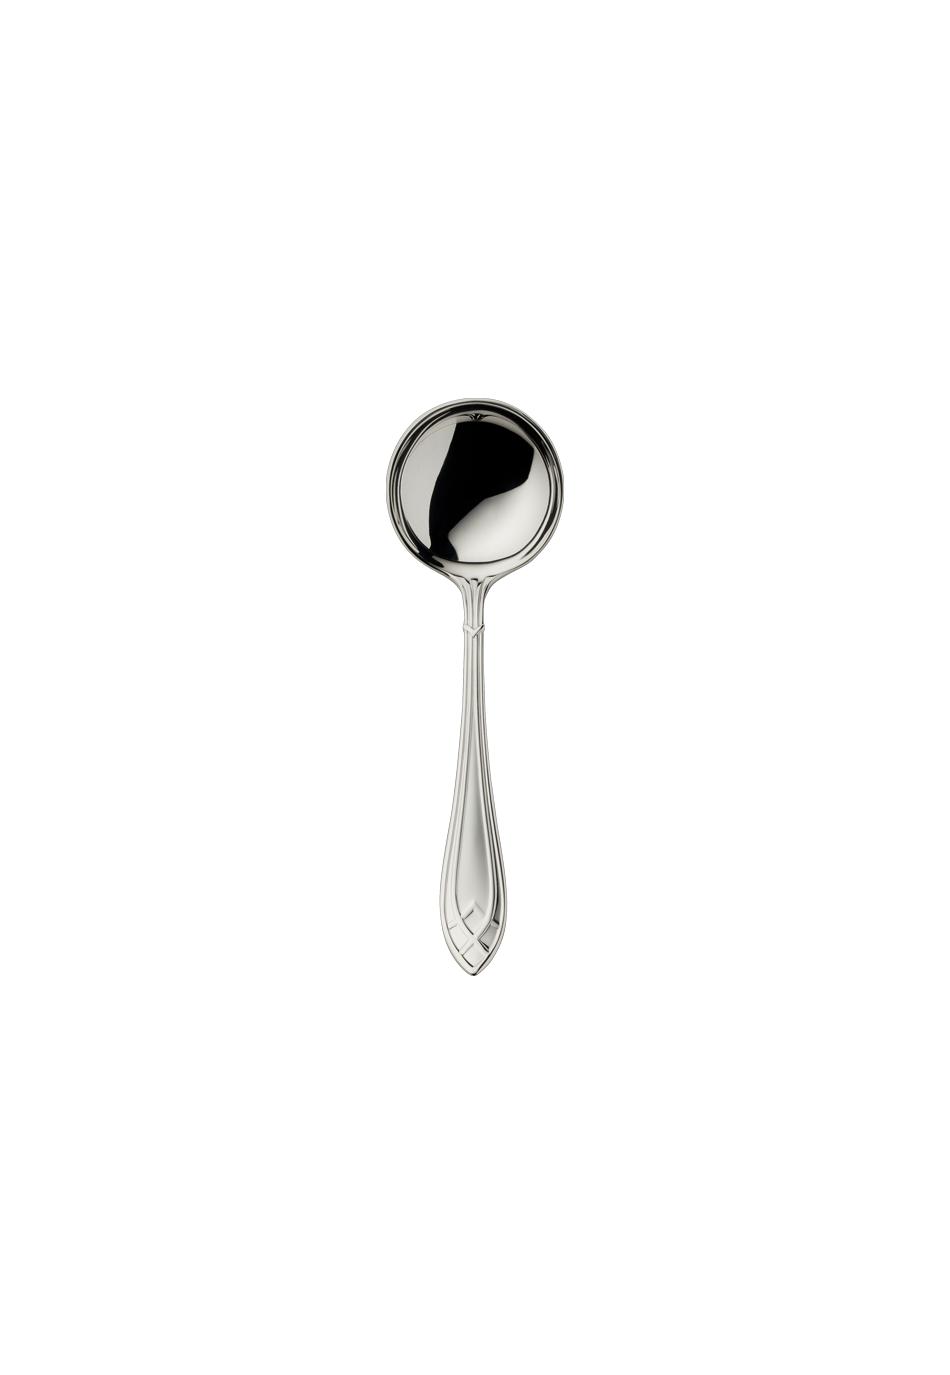 Arcade Sugar Spoon (150g massive silverplated)